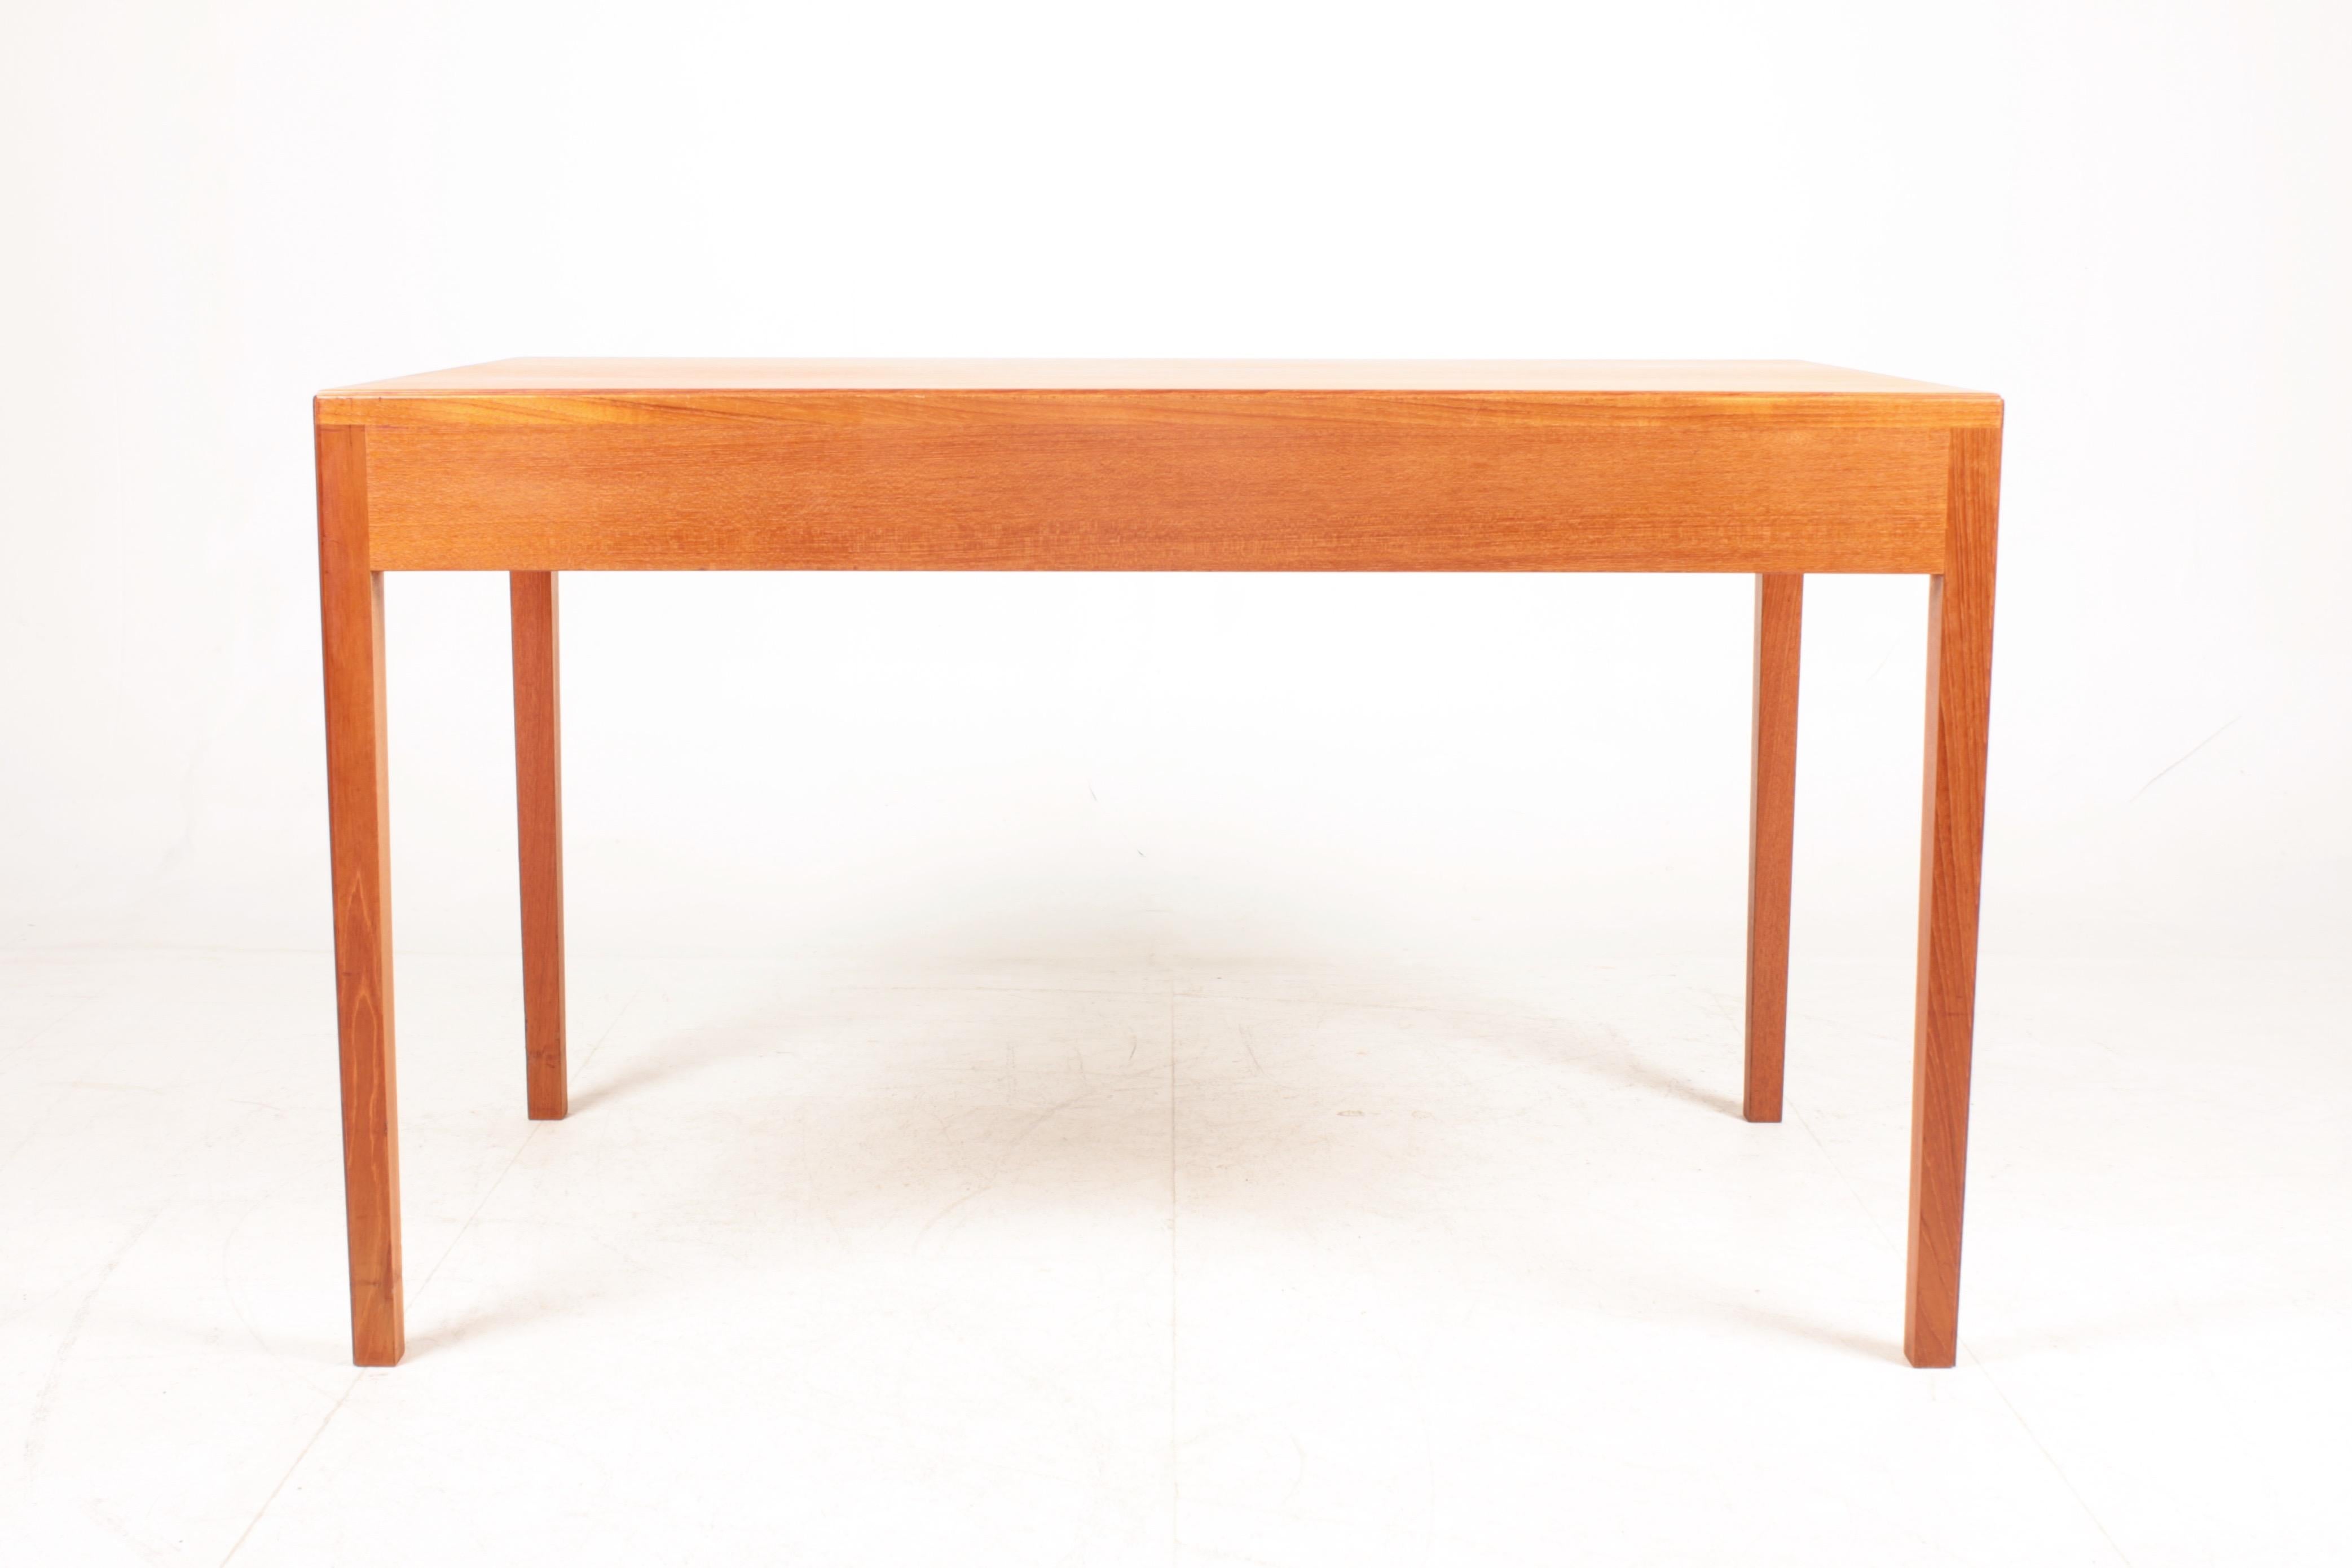 Desk in Teak in Style of Ole Wanscher, Midcentury Danish Design, 1950s For Sale 2